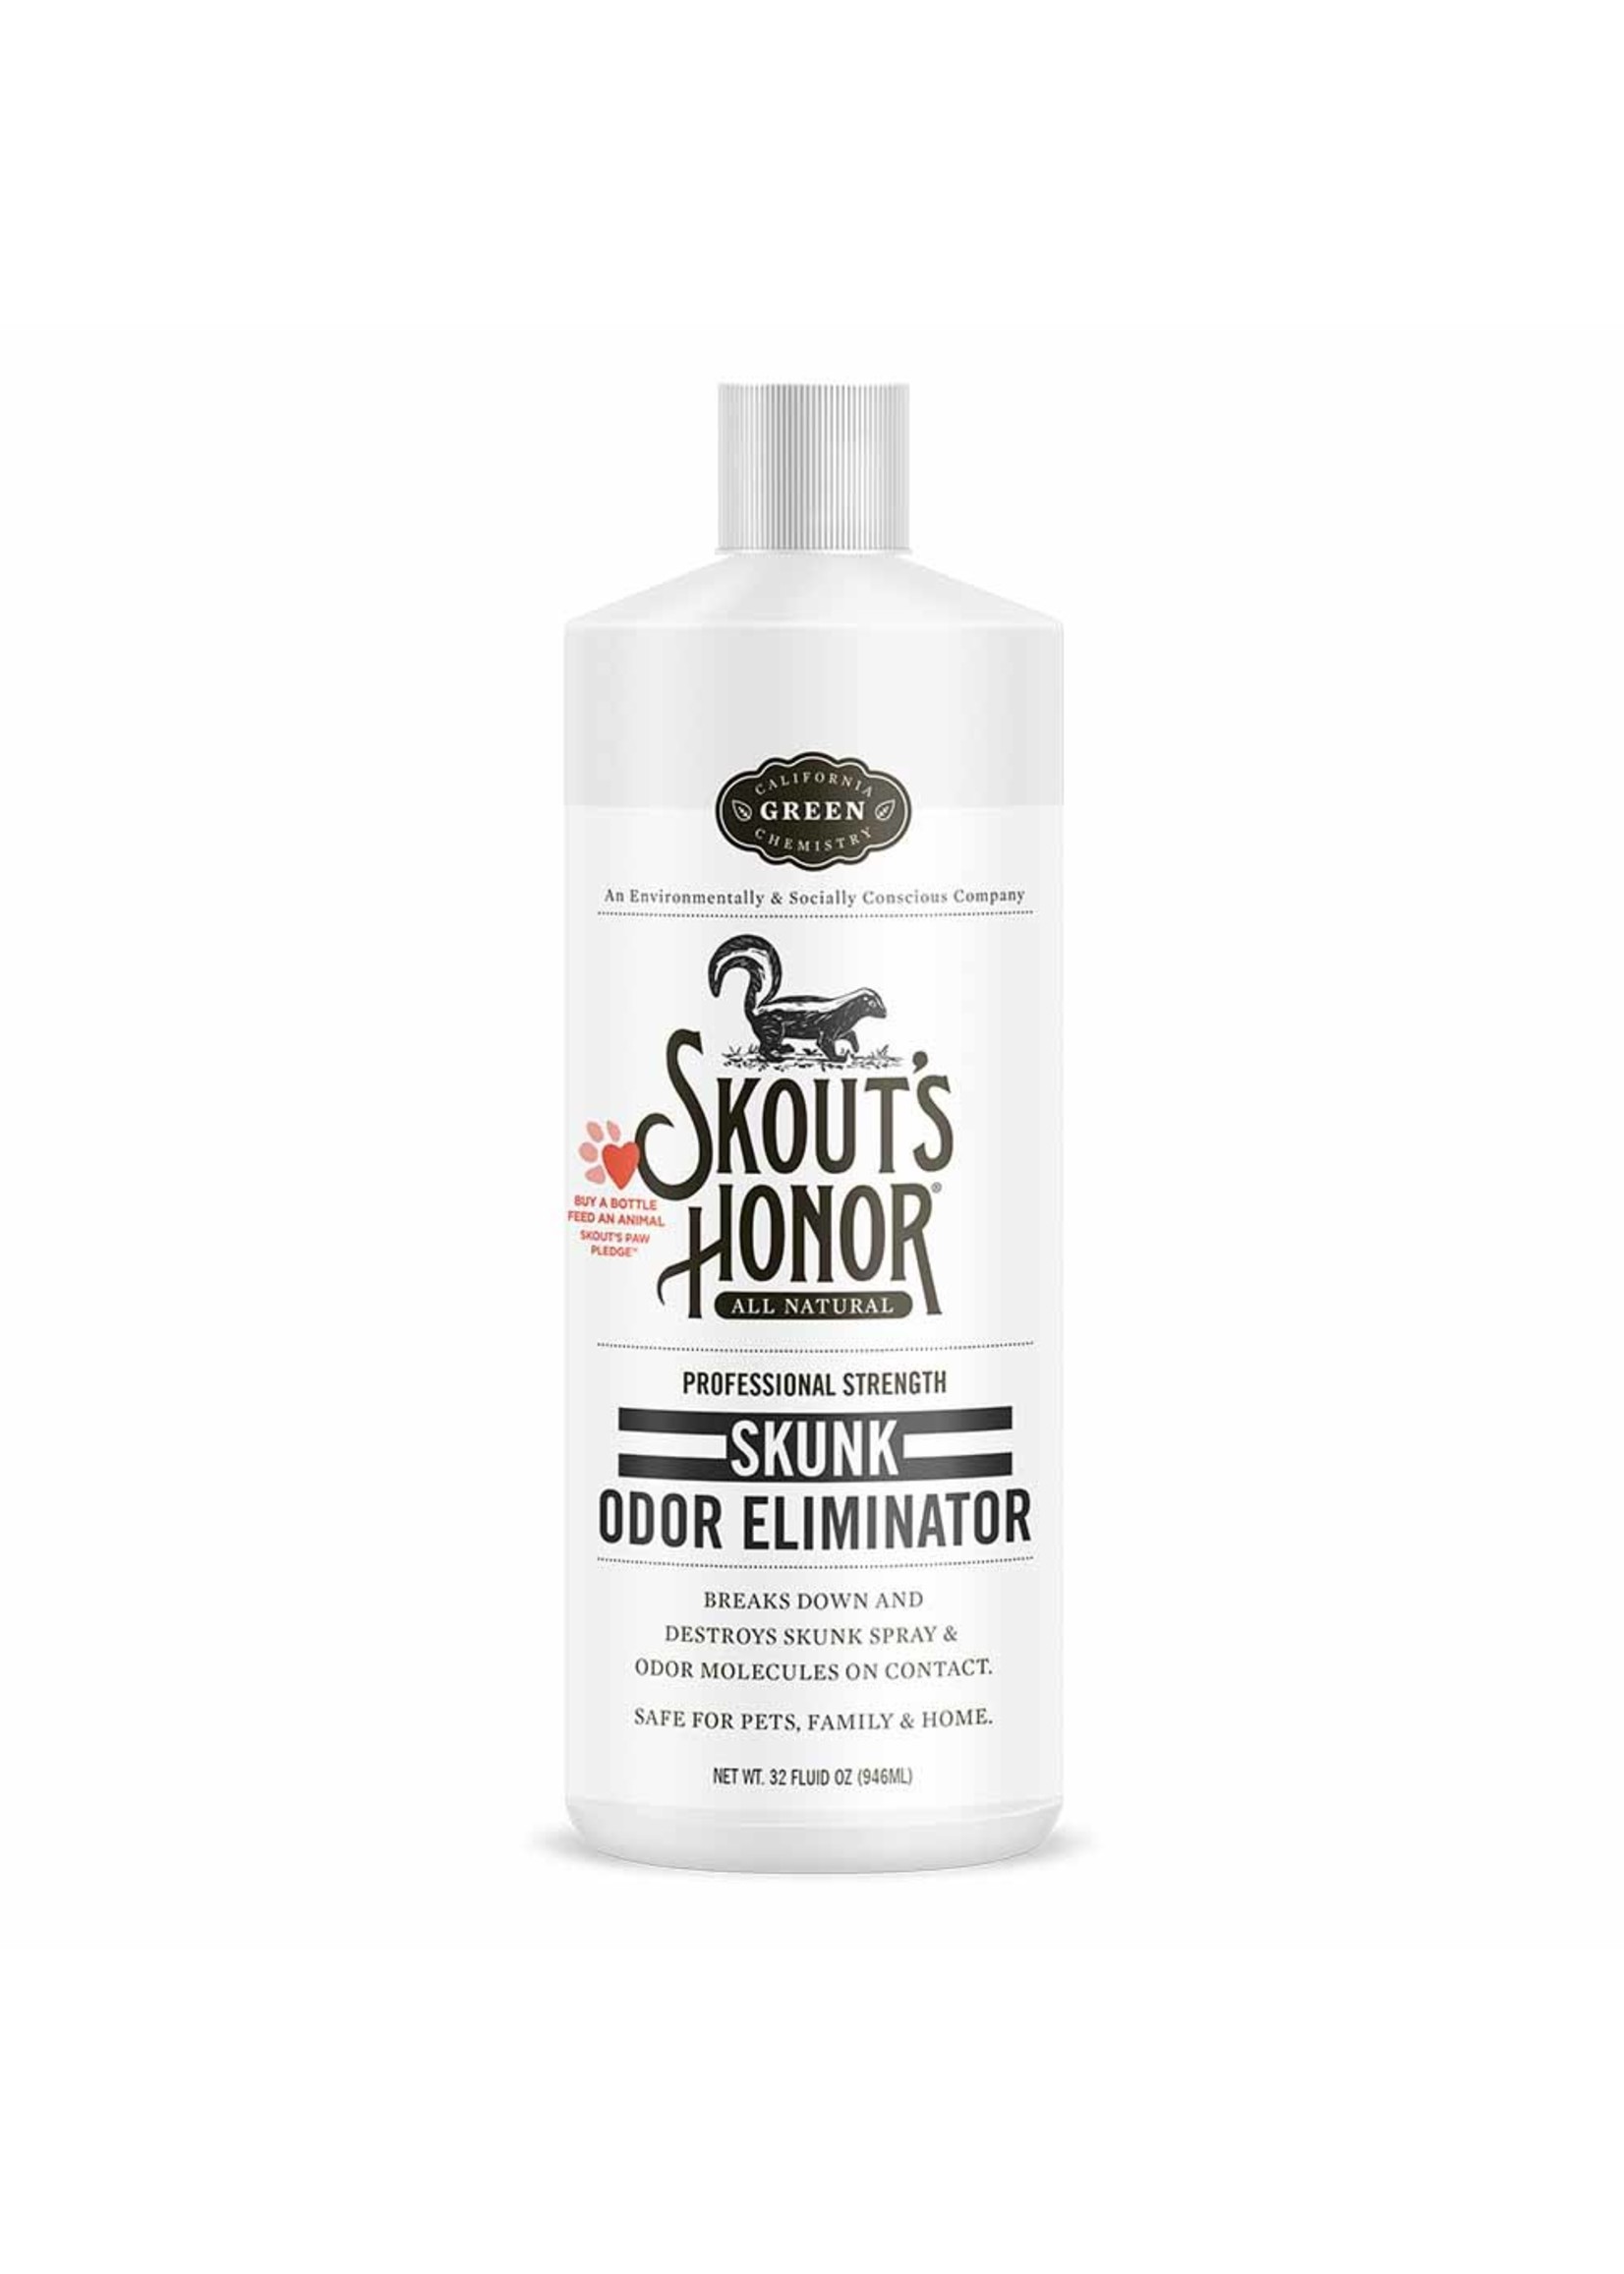 Skouts Honor Skouts Odor Eliminator - Skunk